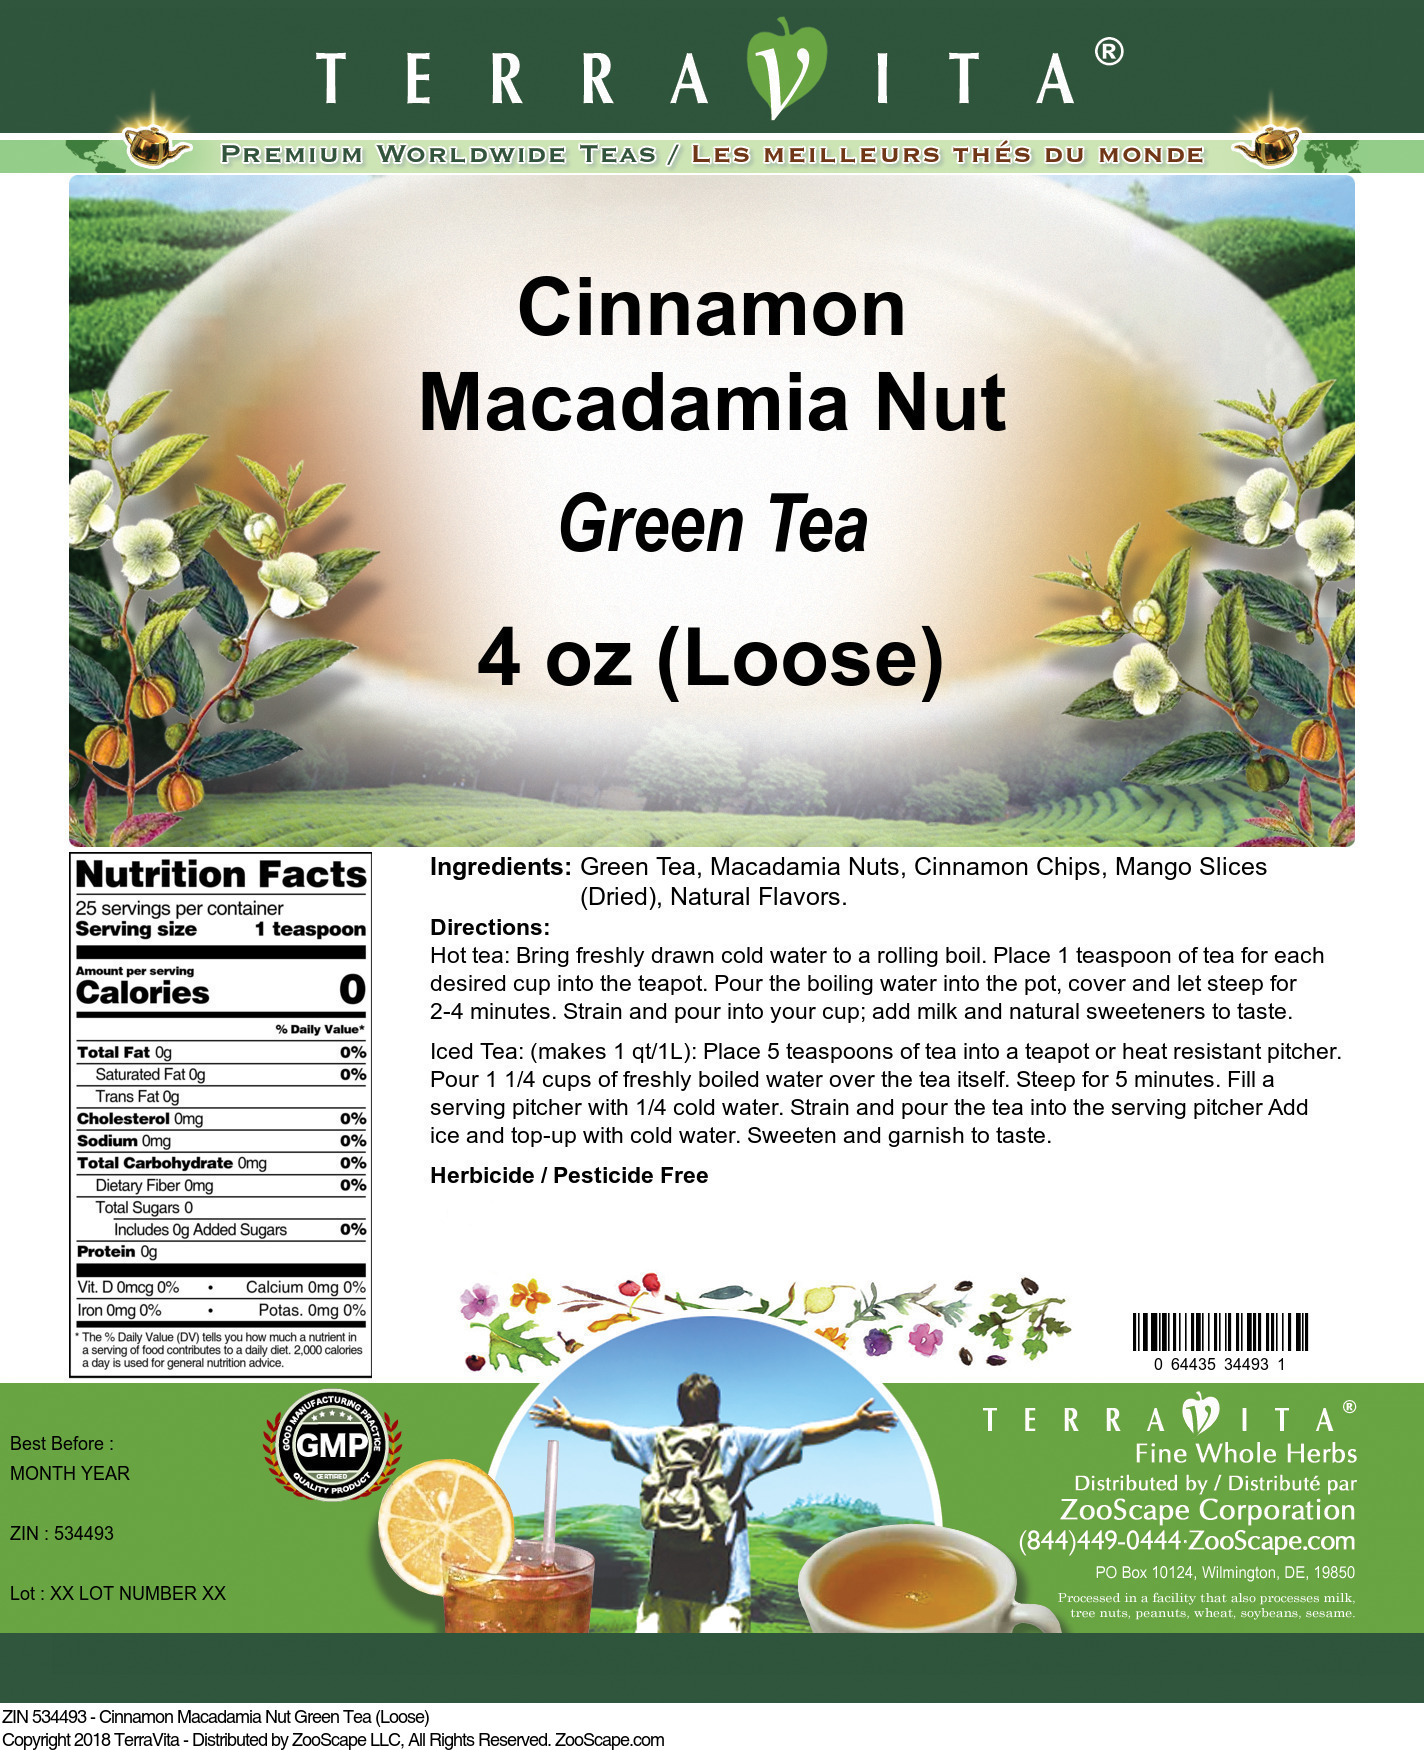 Cinnamon Macadamia Nut Green Tea (Loose) - Label